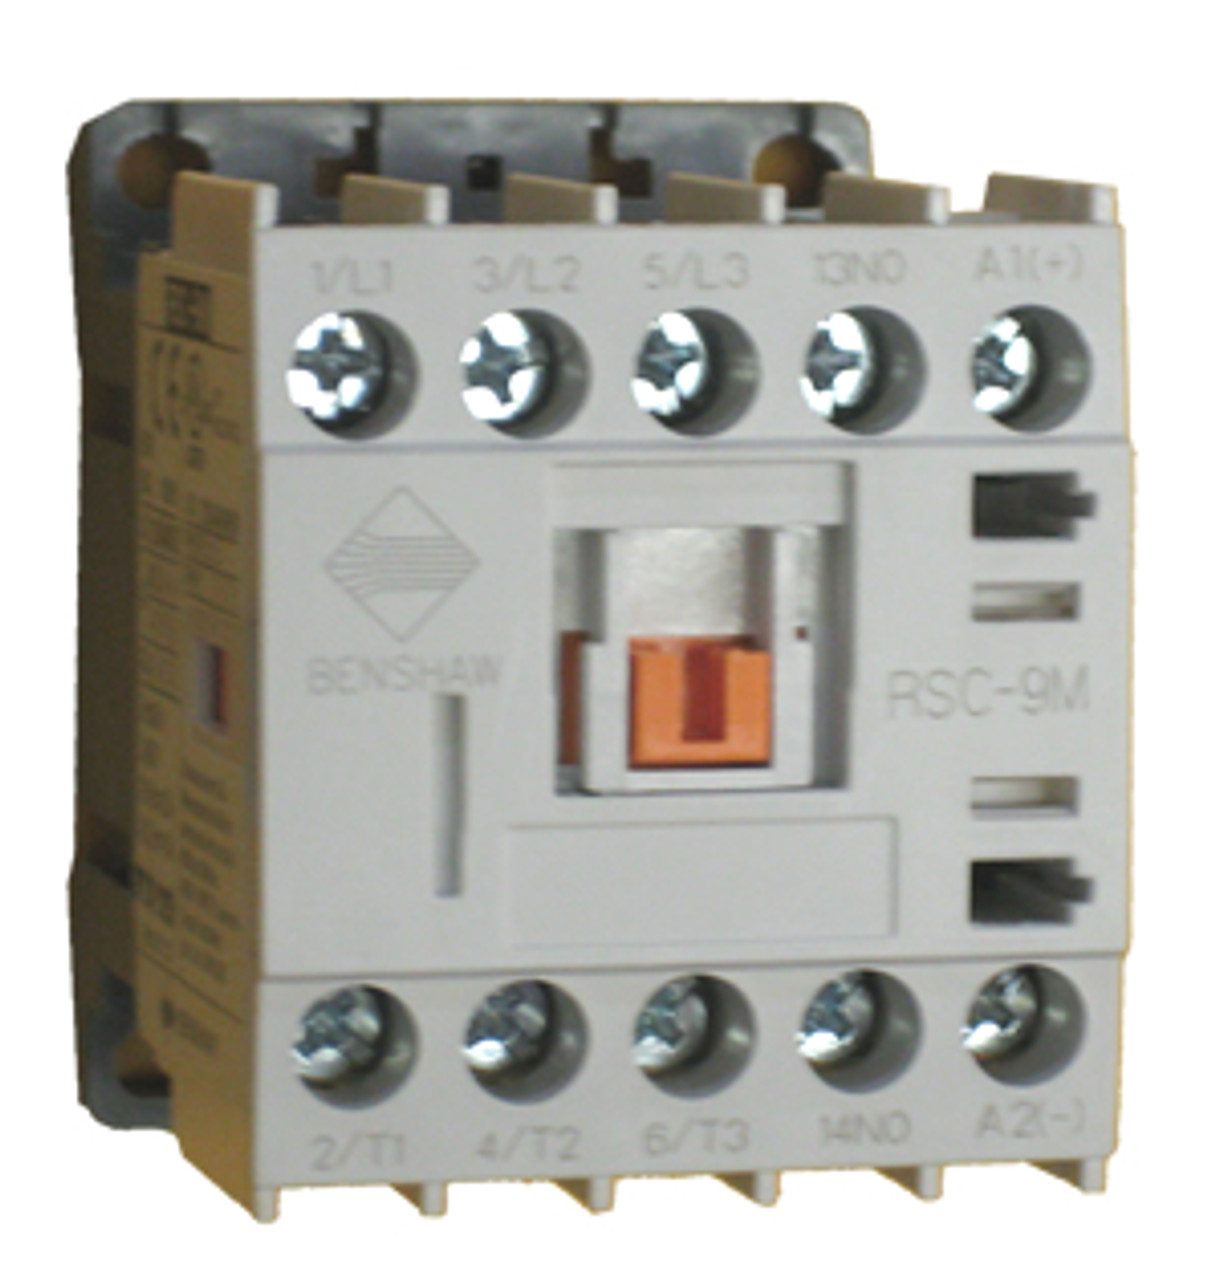 Benshaw RSC-9M-AC240 contactor